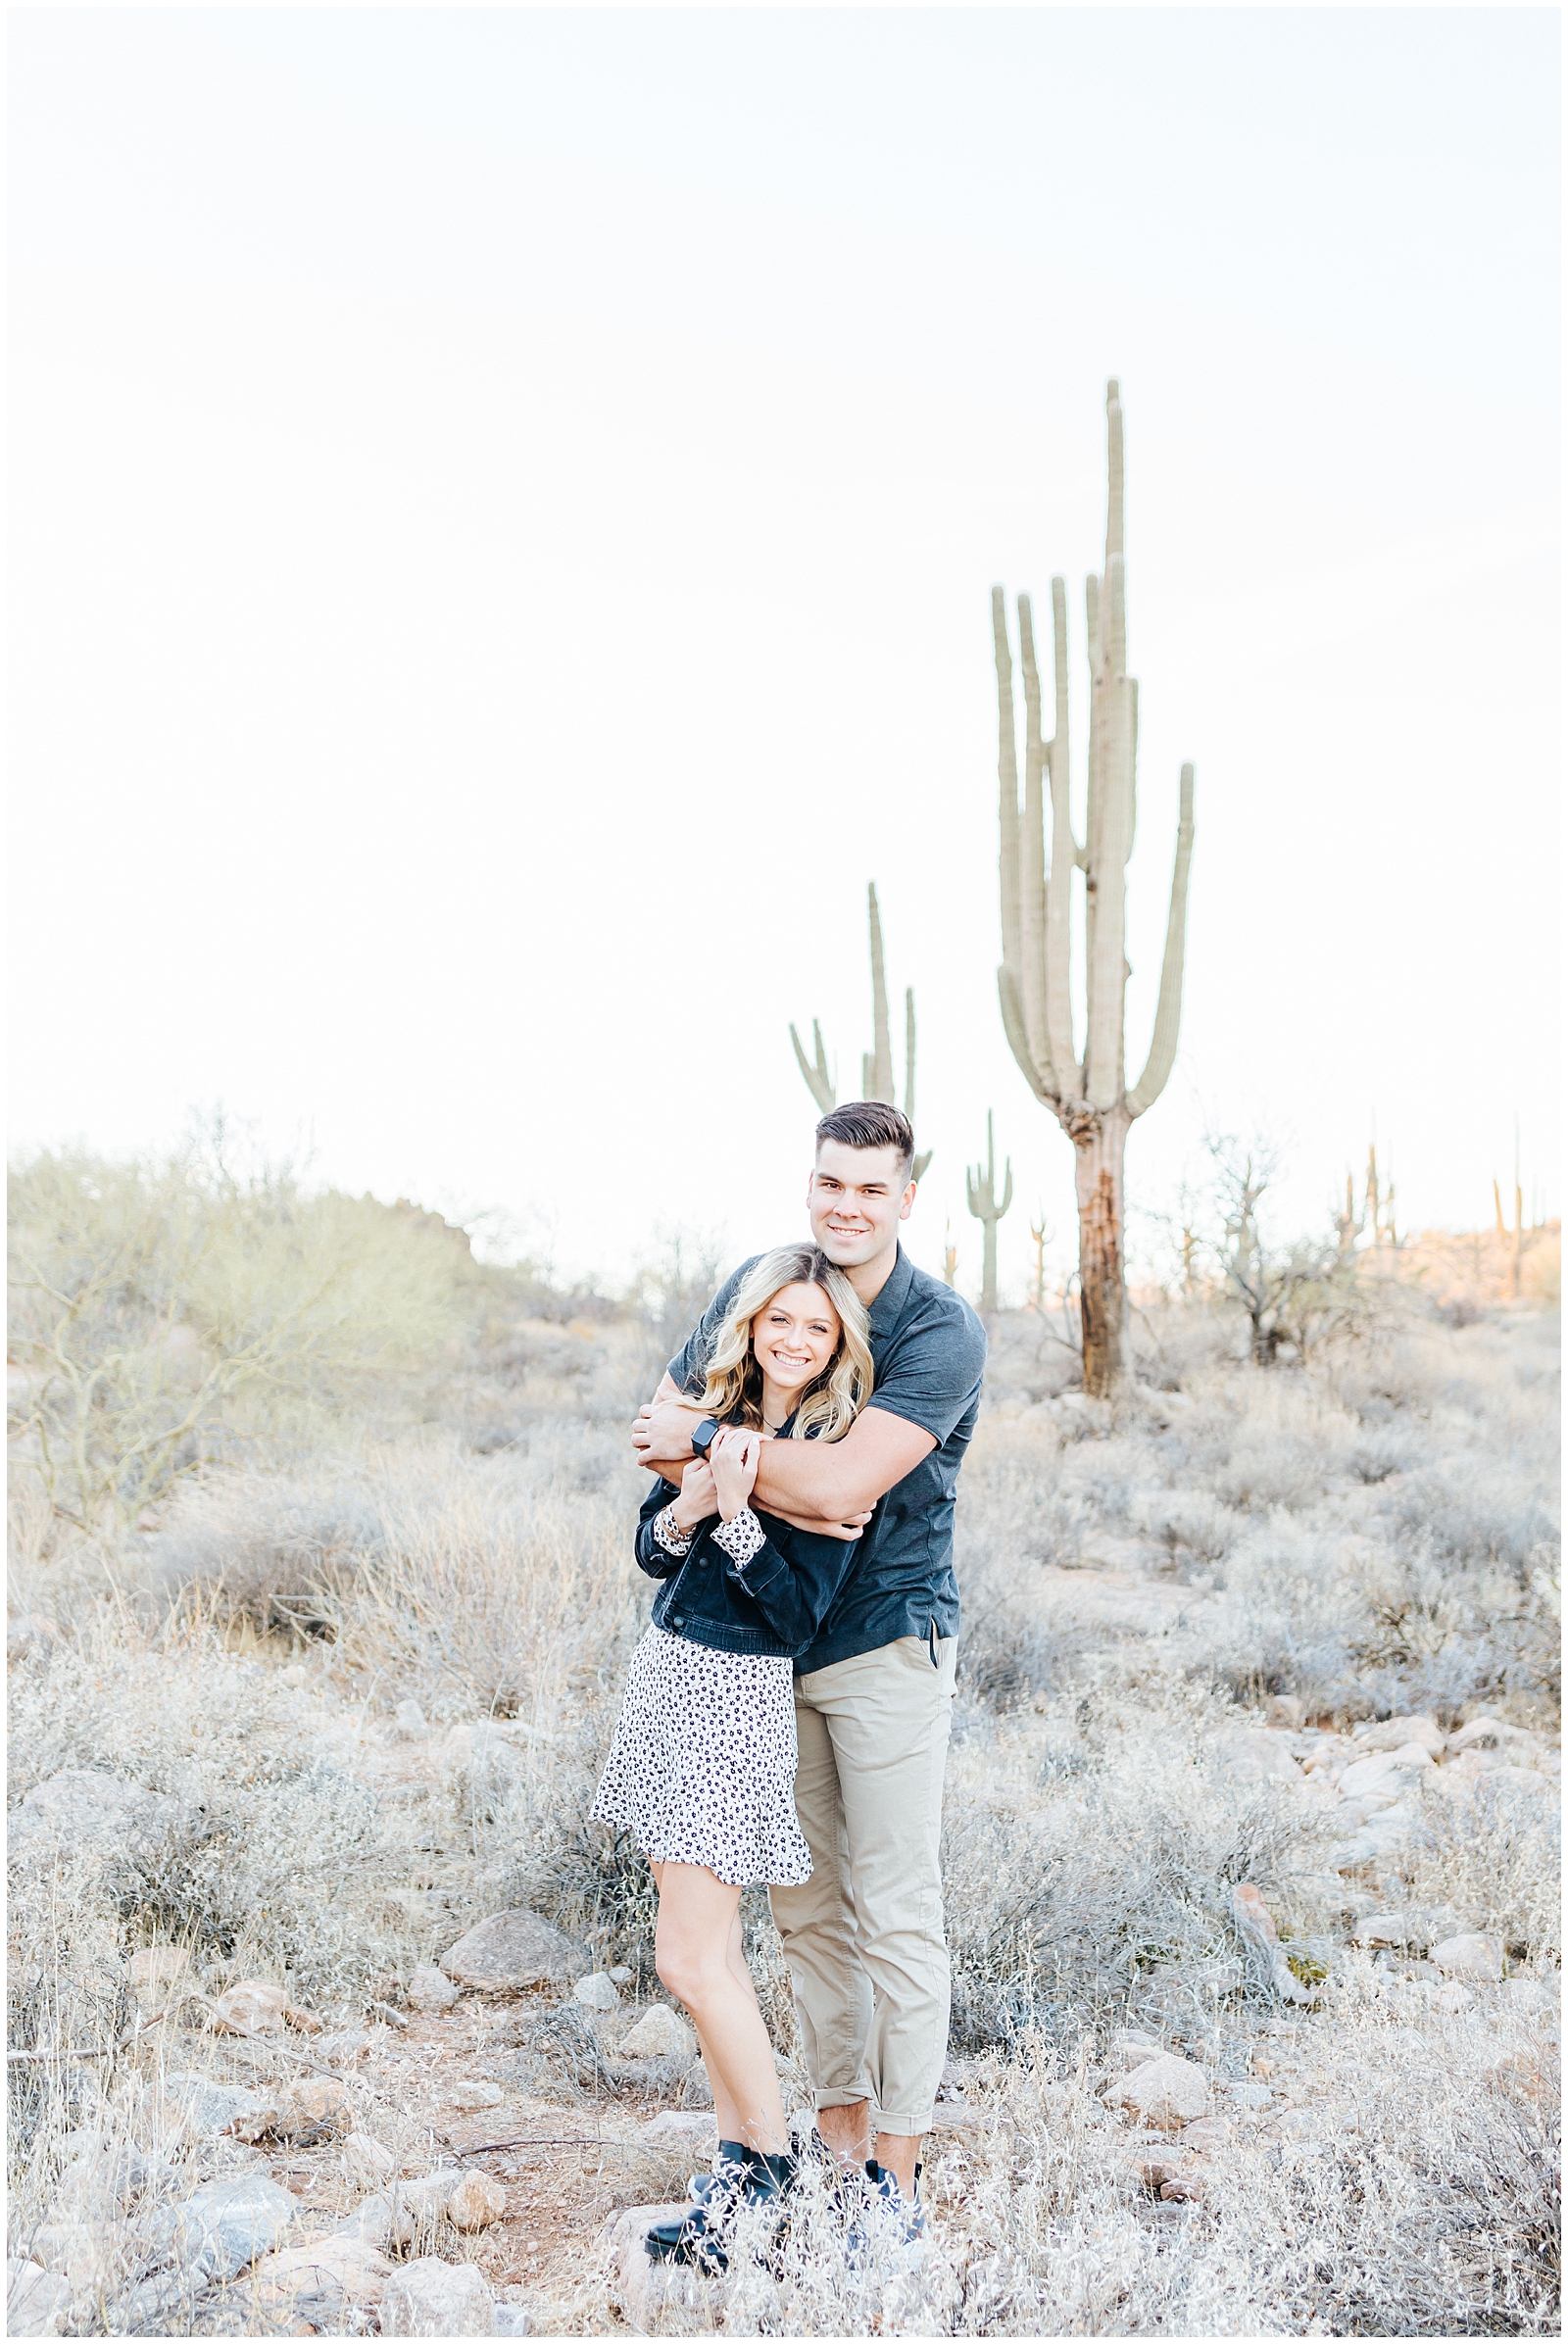 Snuggly Arizona Couple - Dreamy Arizona Desert Session